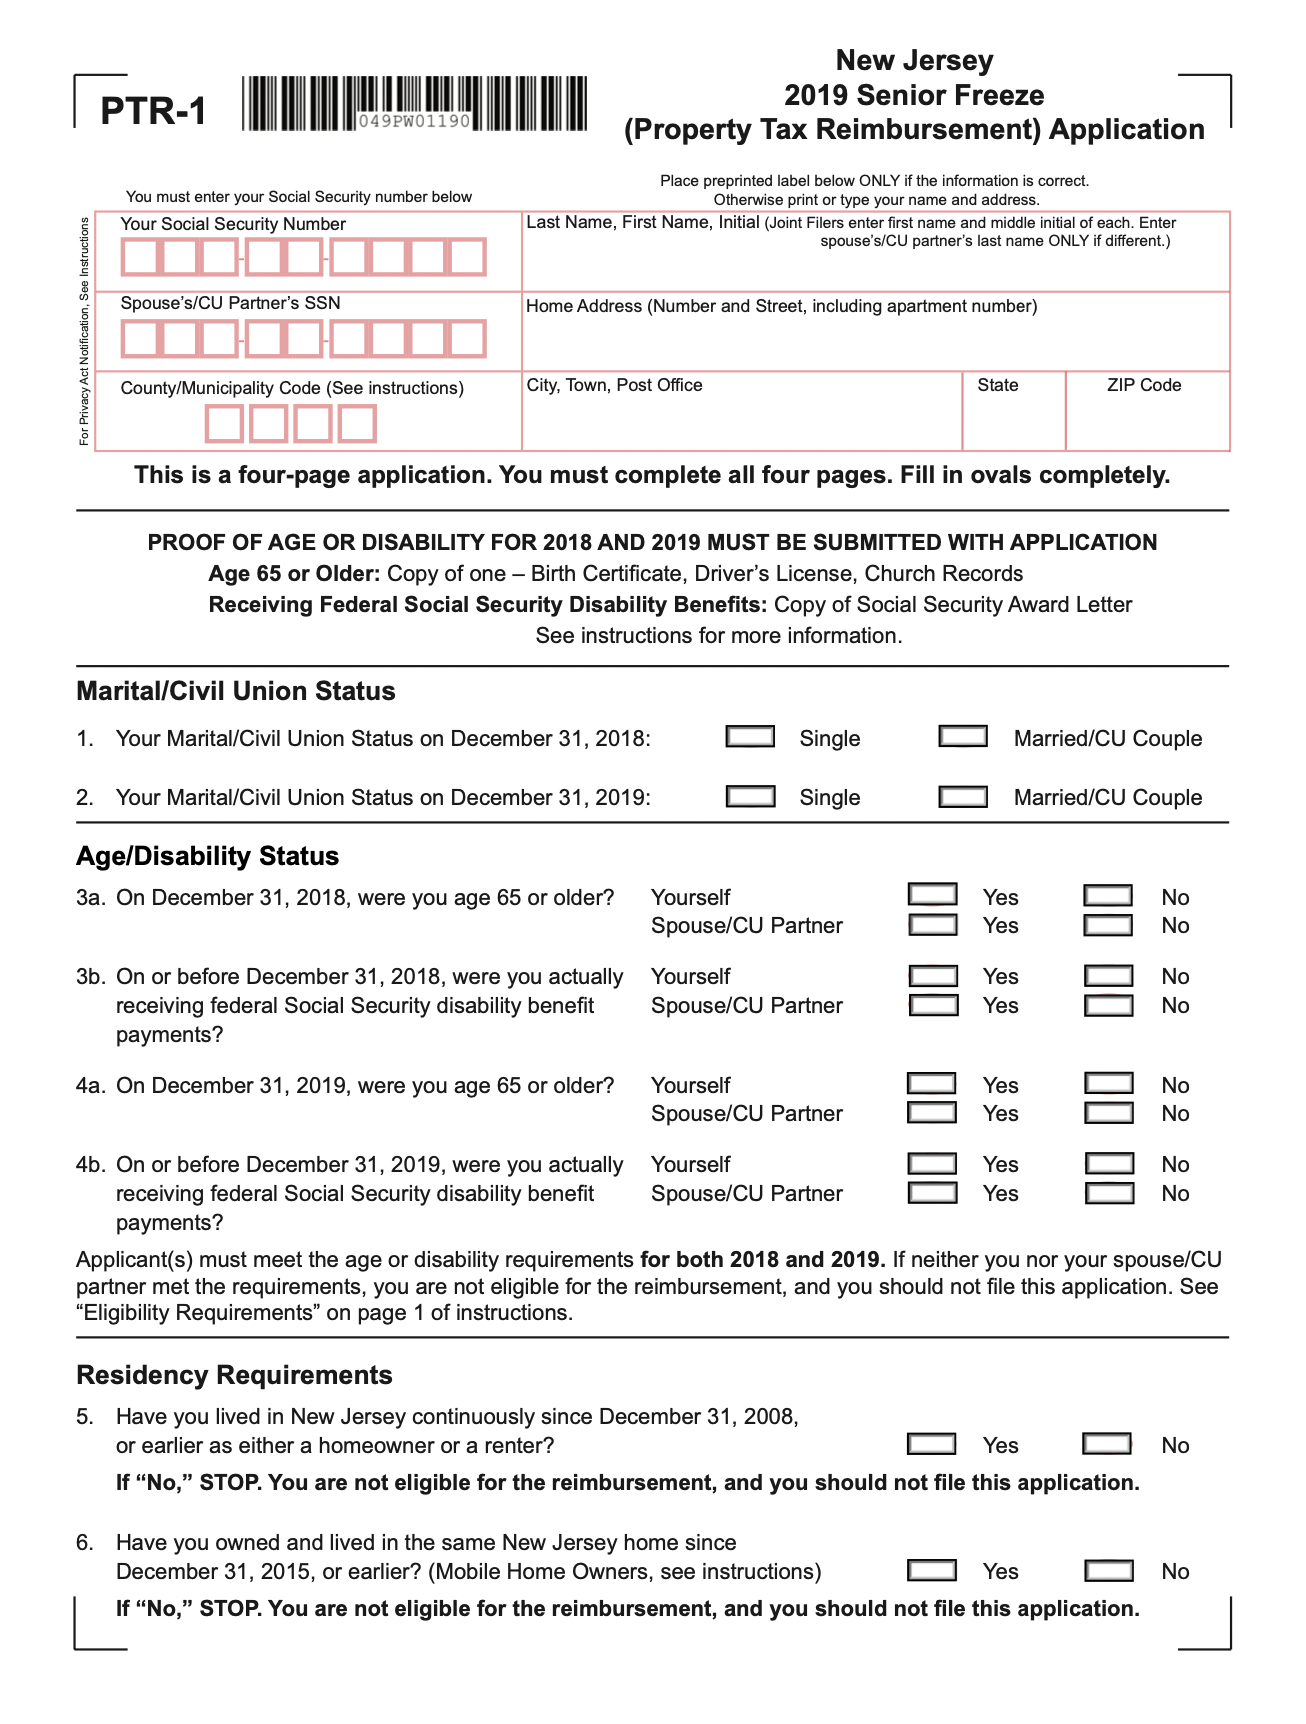 NJ Tax Rebate Form PrintableRebateForm